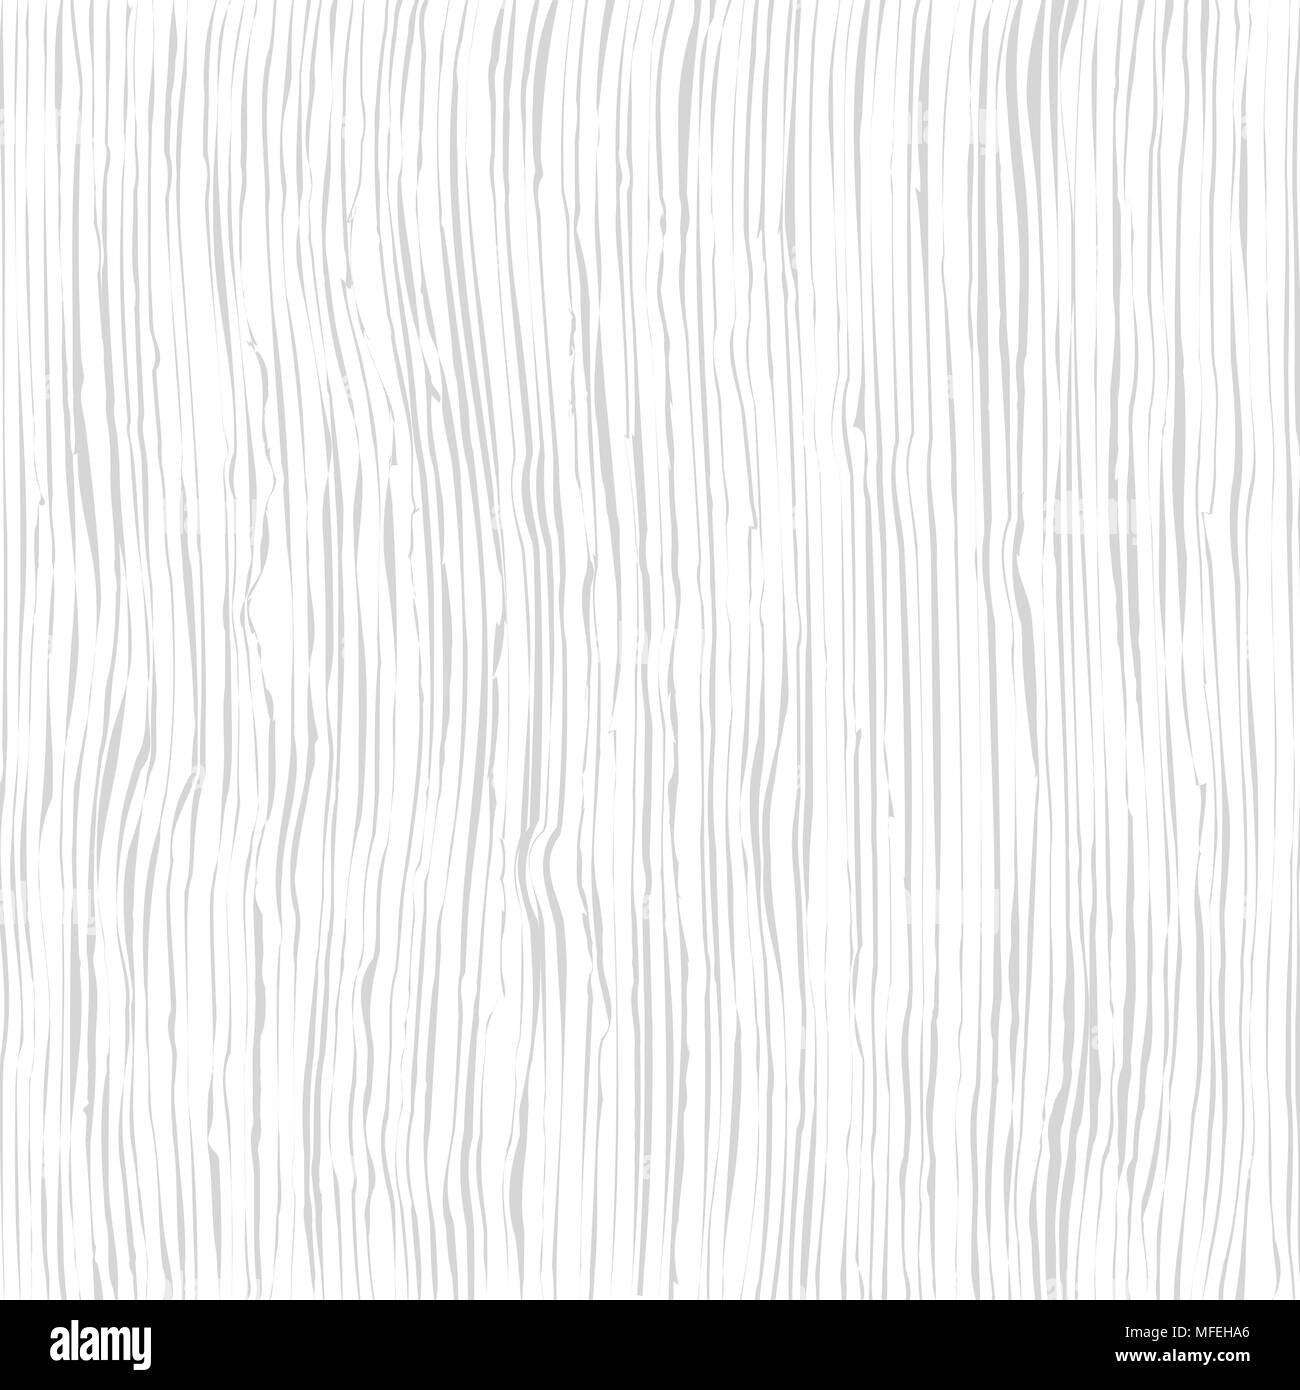 Wooden surface texture. Abstract grain pattern. Vector illustration Stock Vector